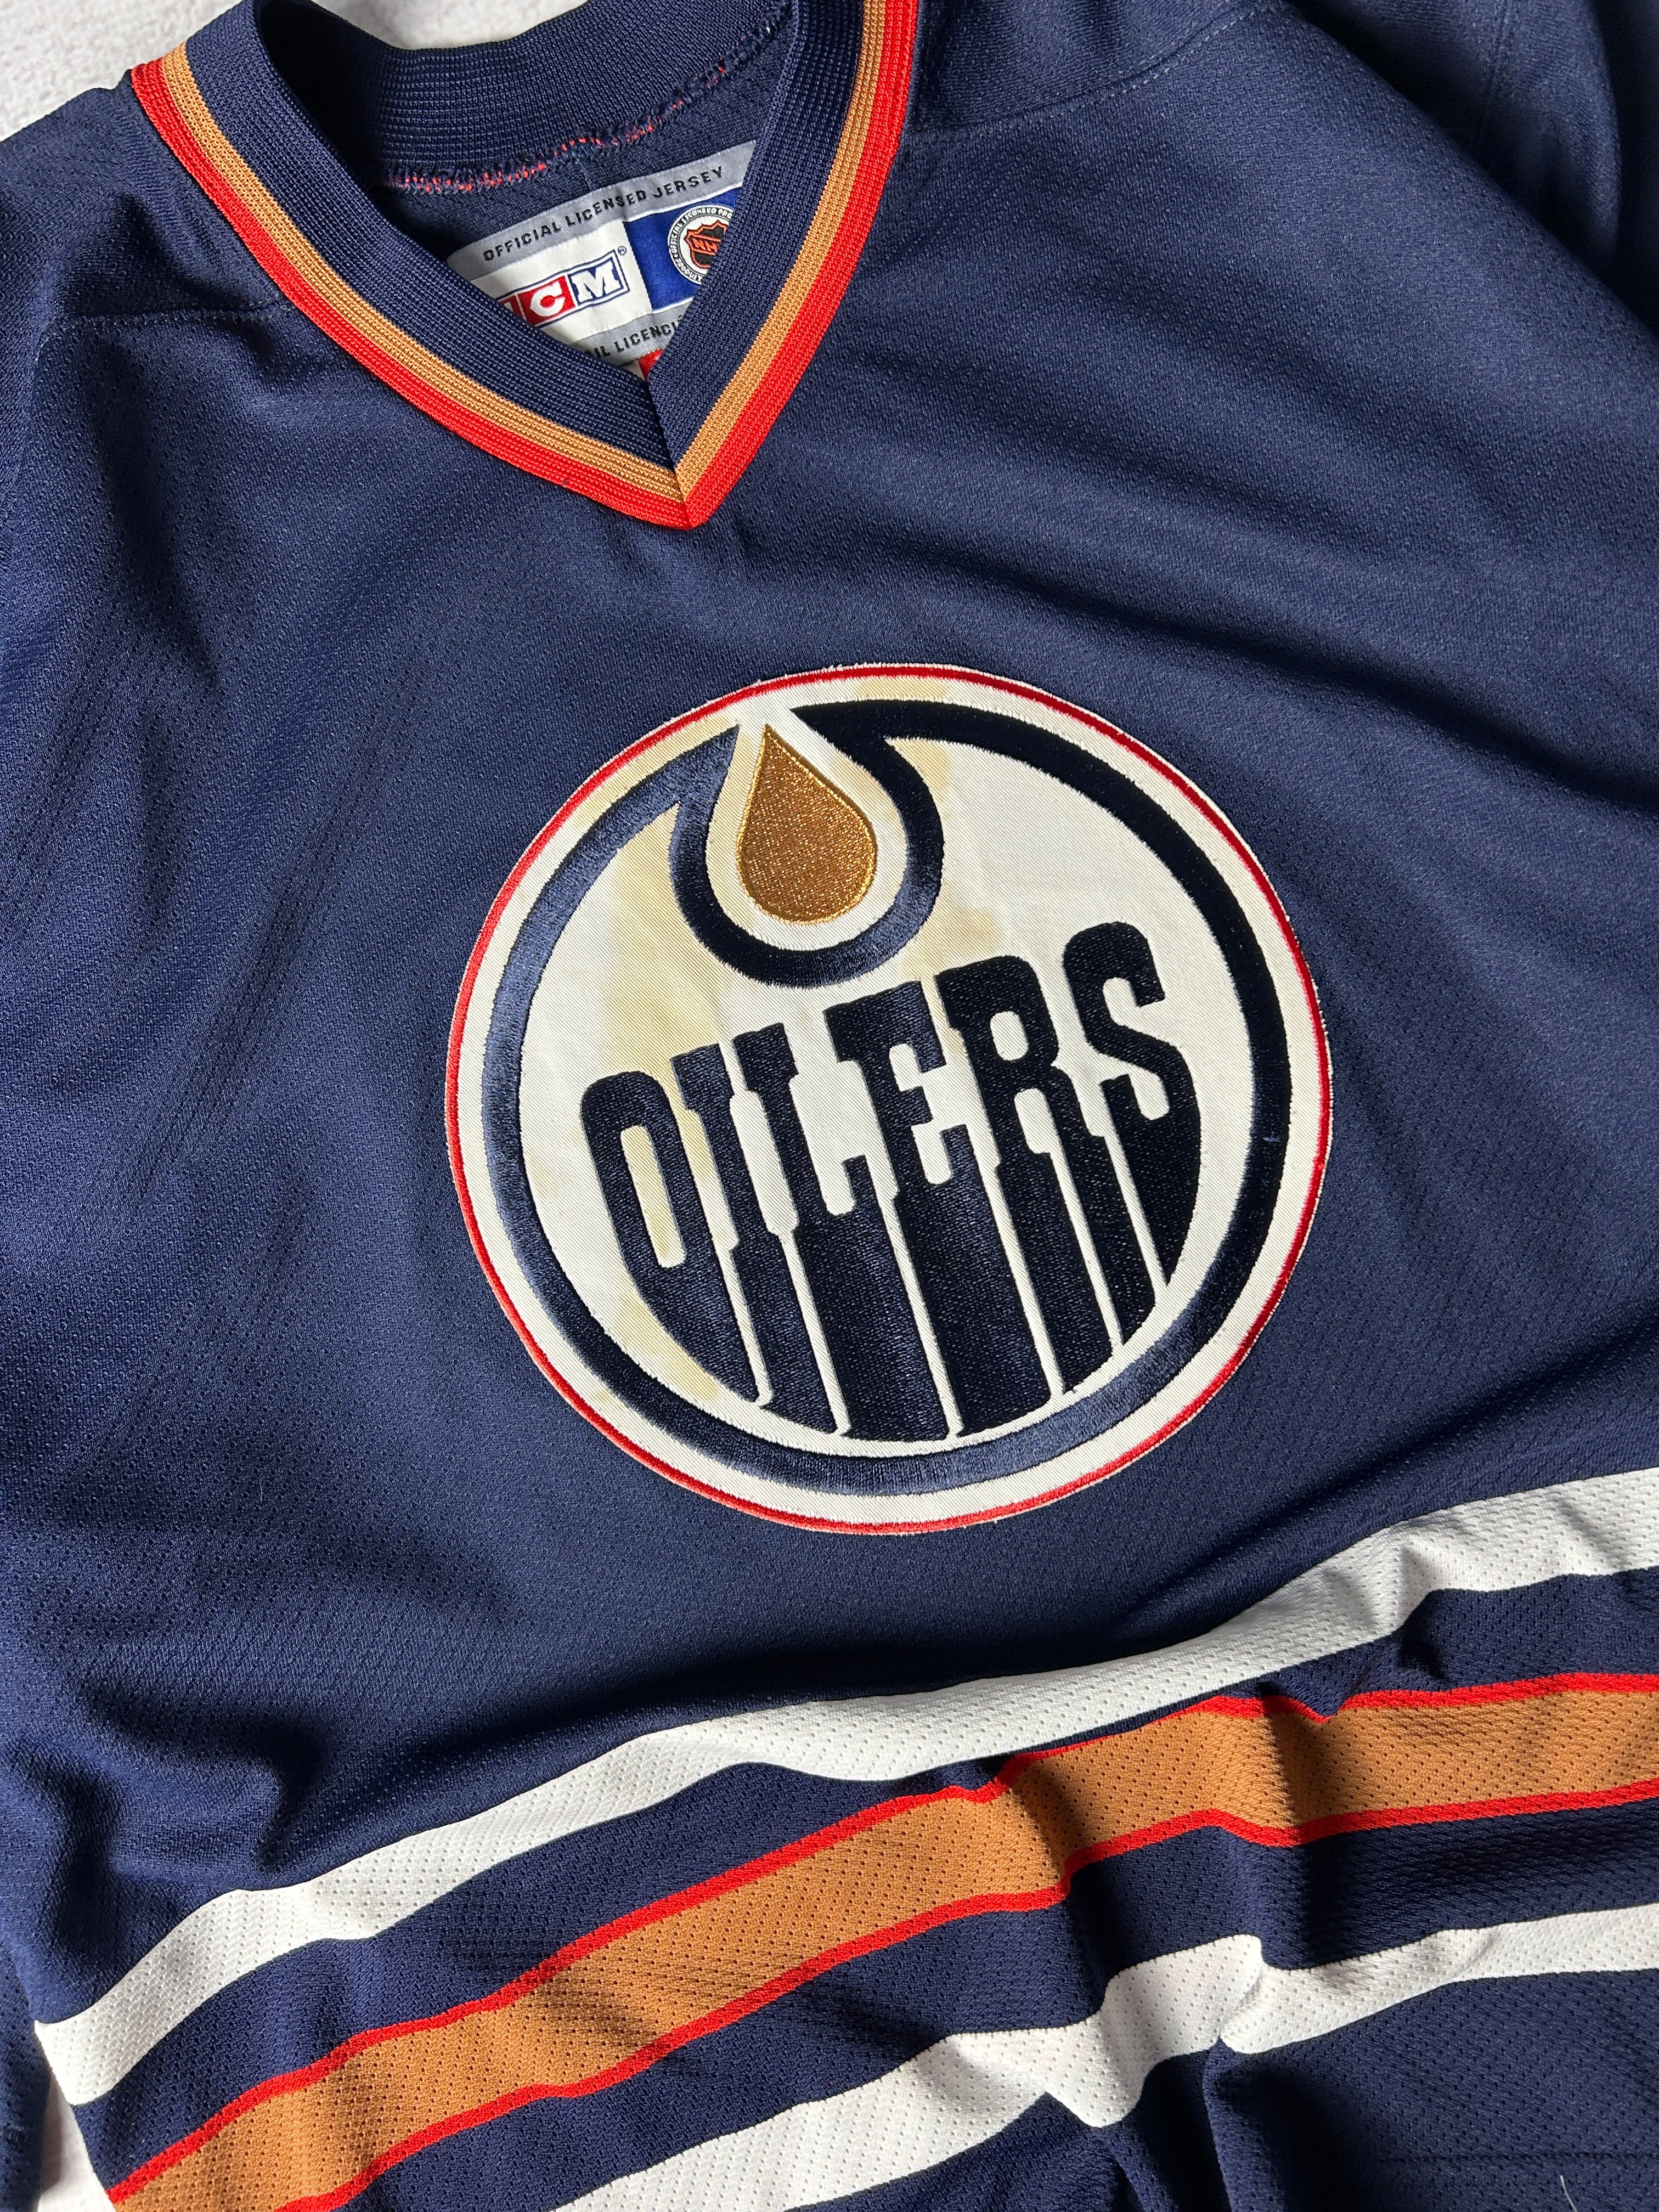 Vintage NHL Edmonton Oilers Jersey - Men's XL